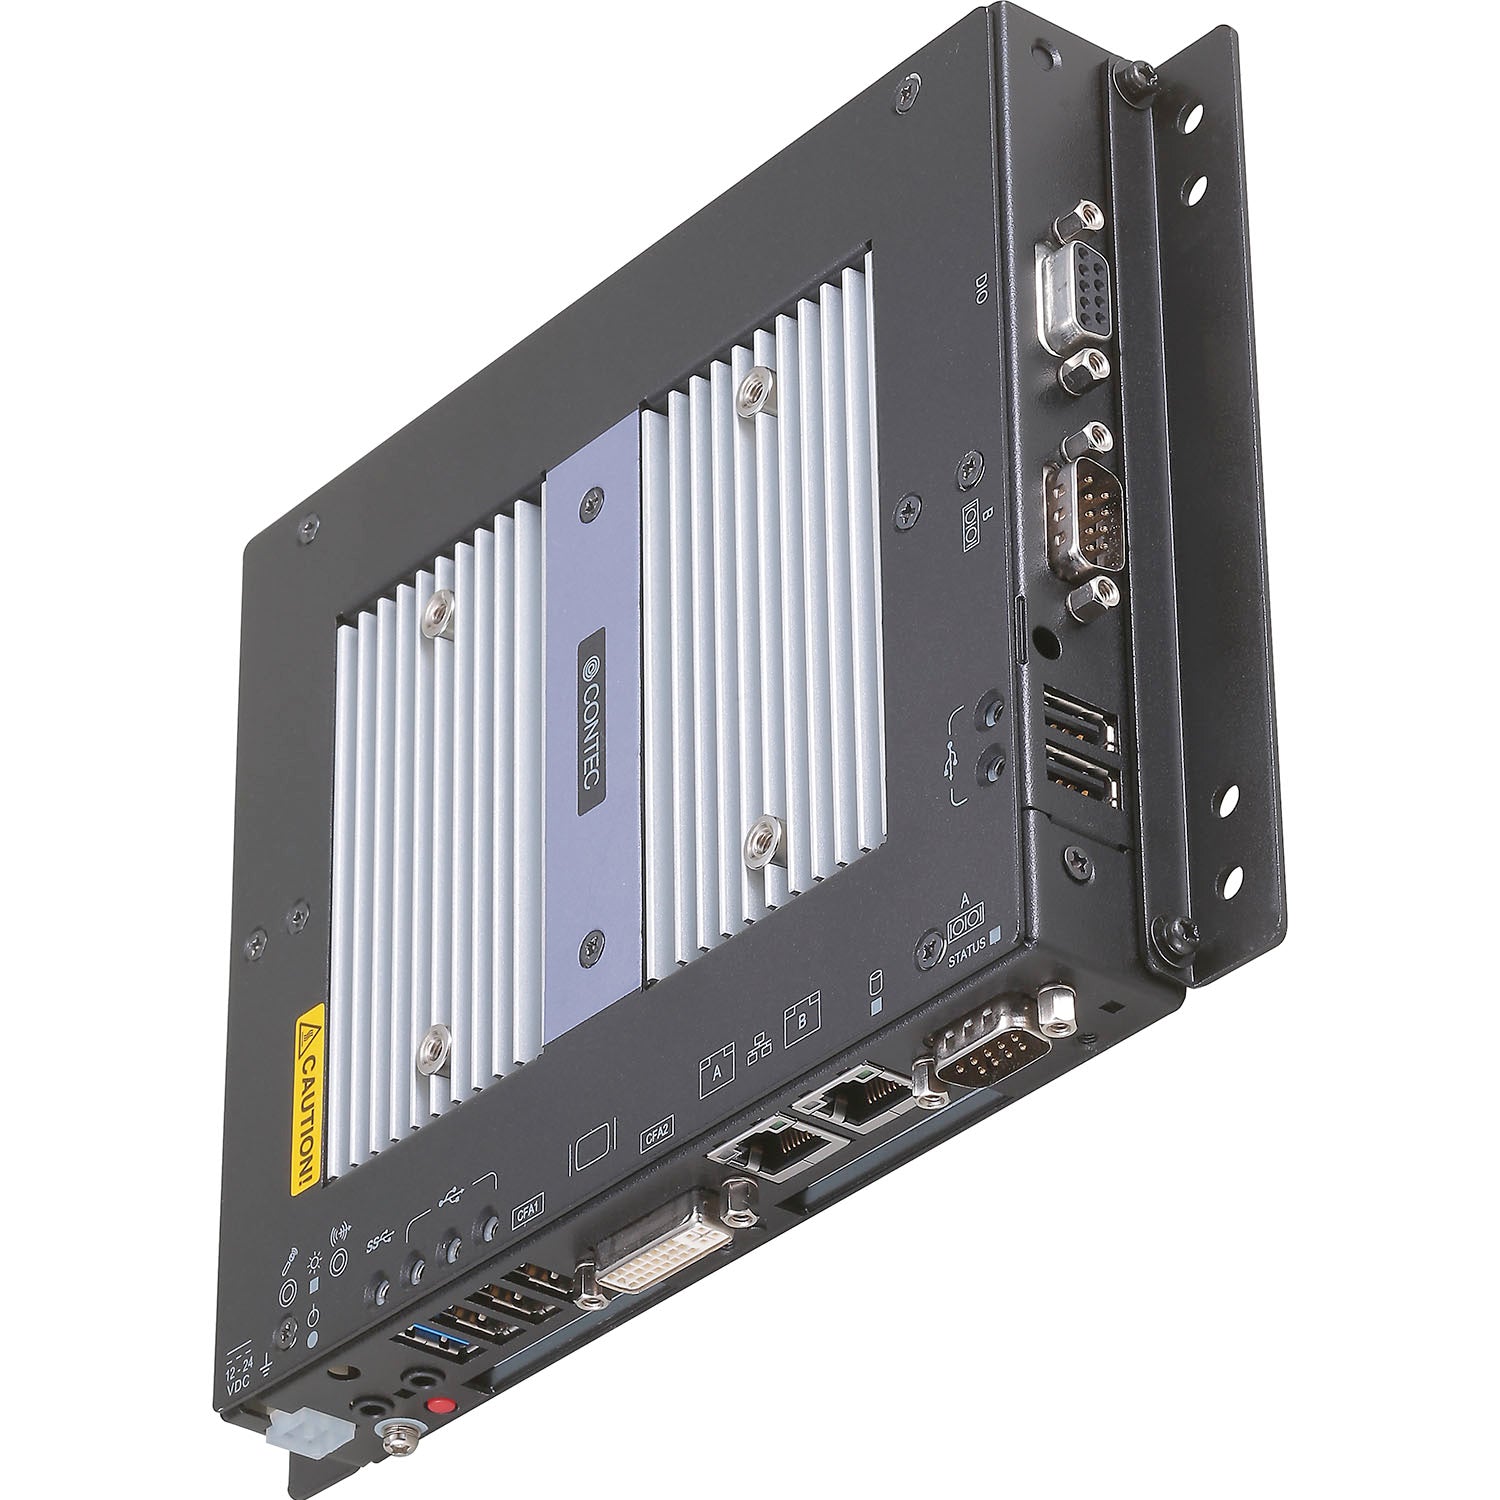 BX-956S - Fanless Embedded PC